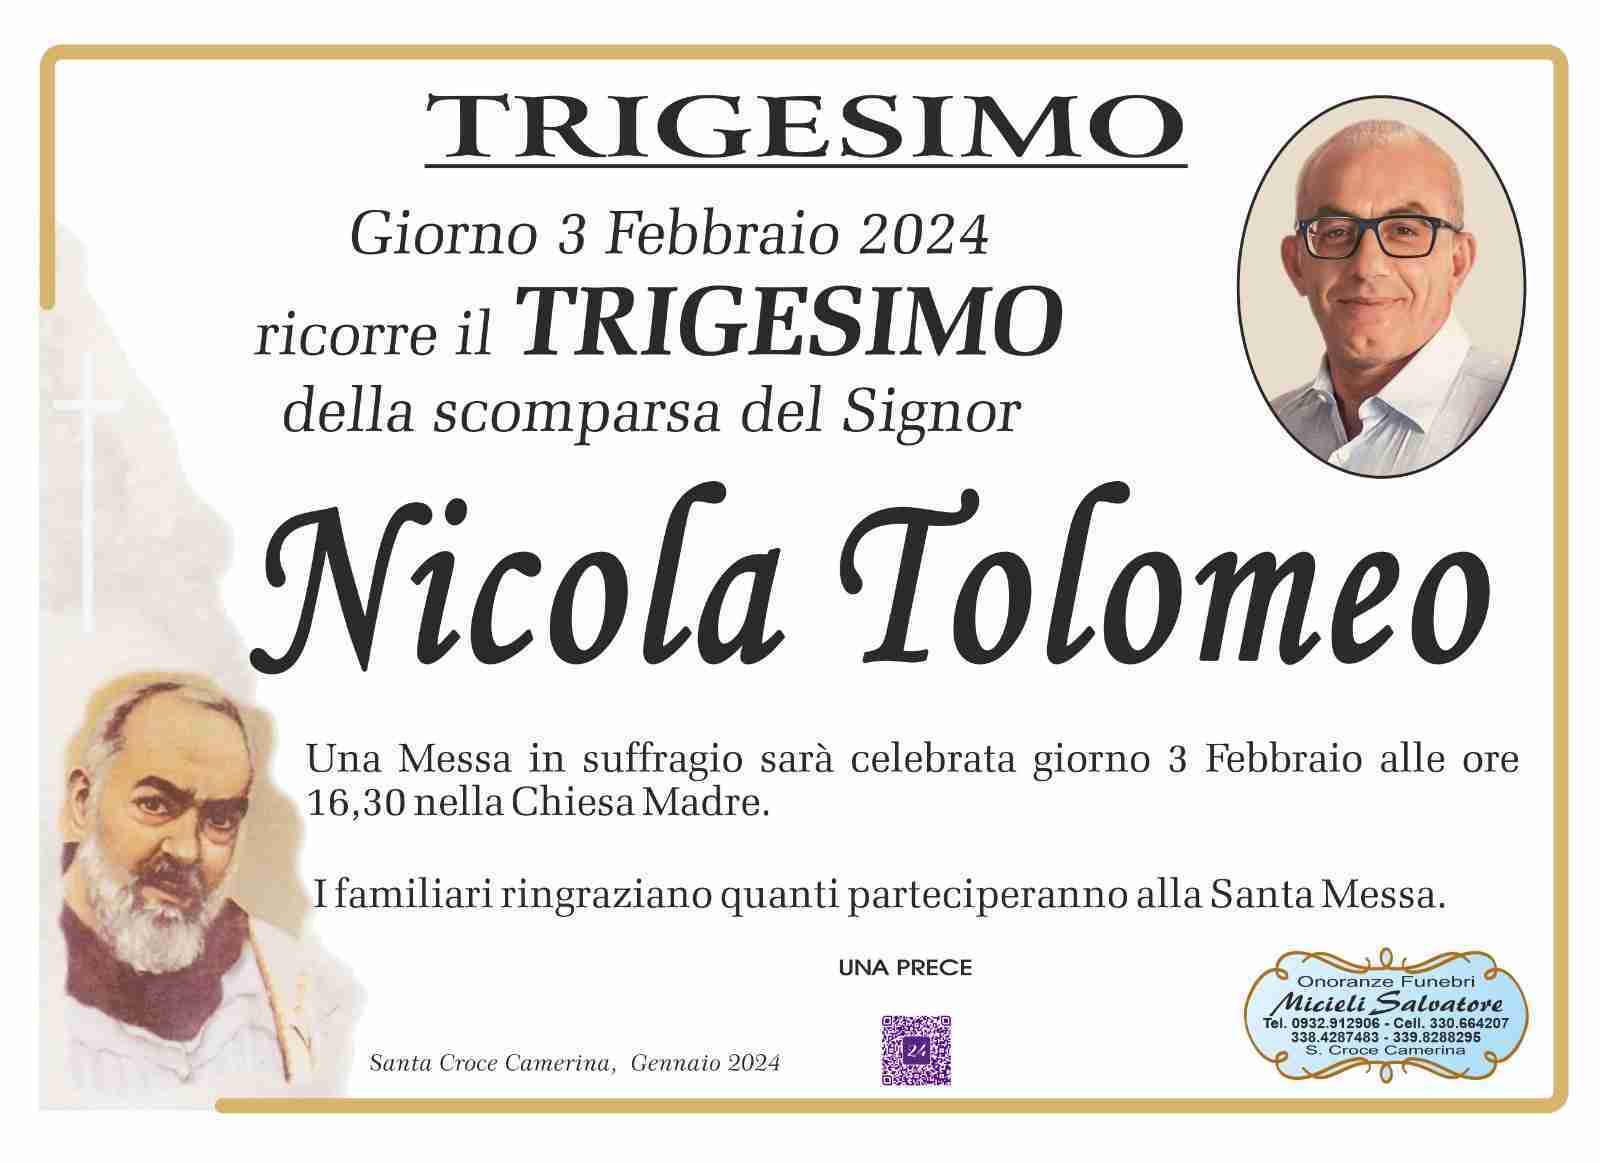 Nicola Tolomeo